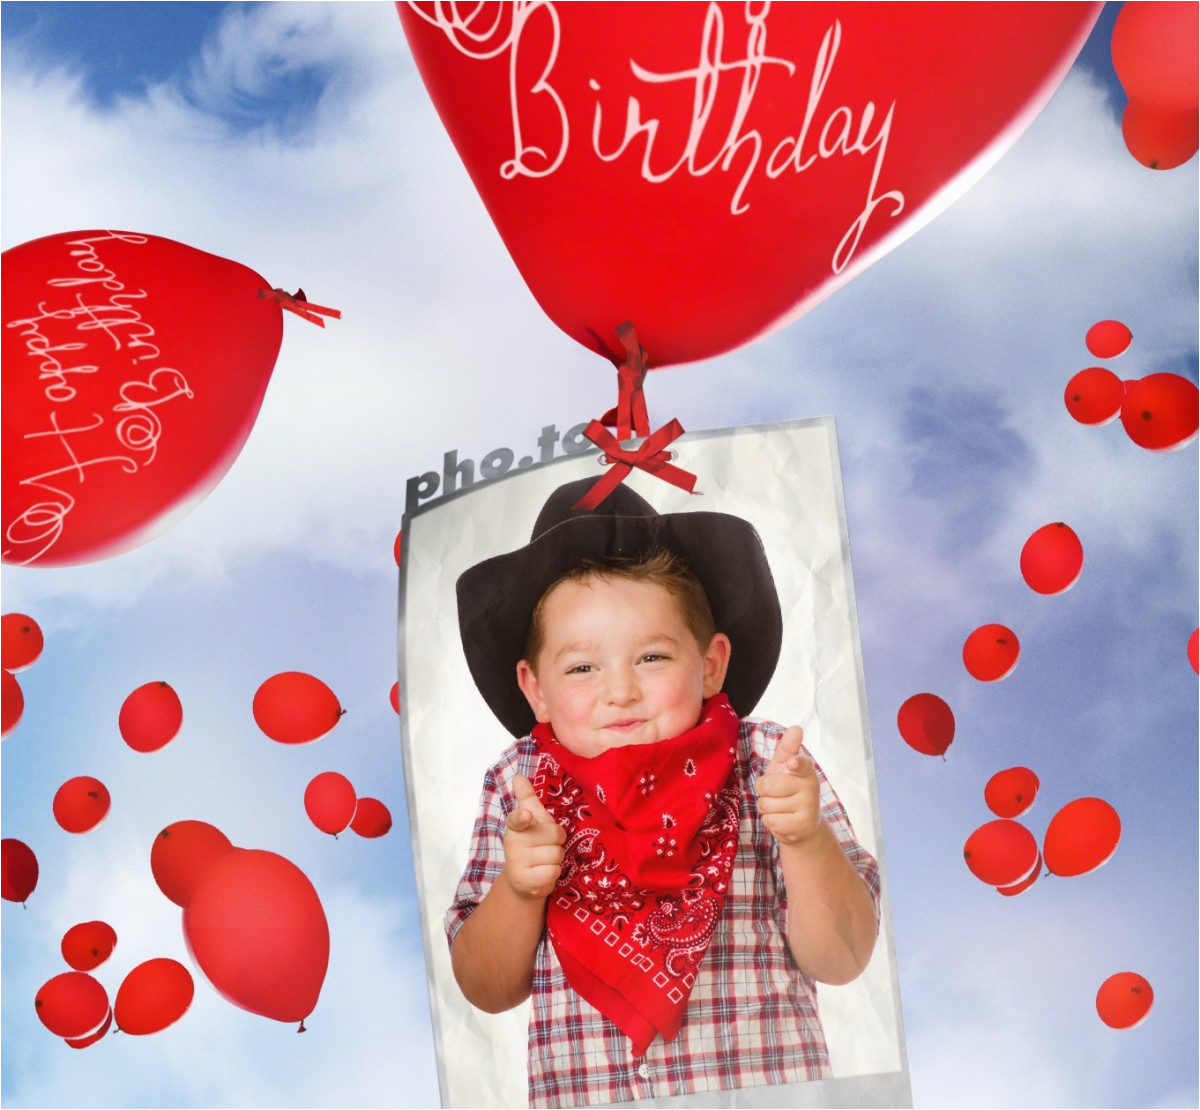 birthday ecard with balloons